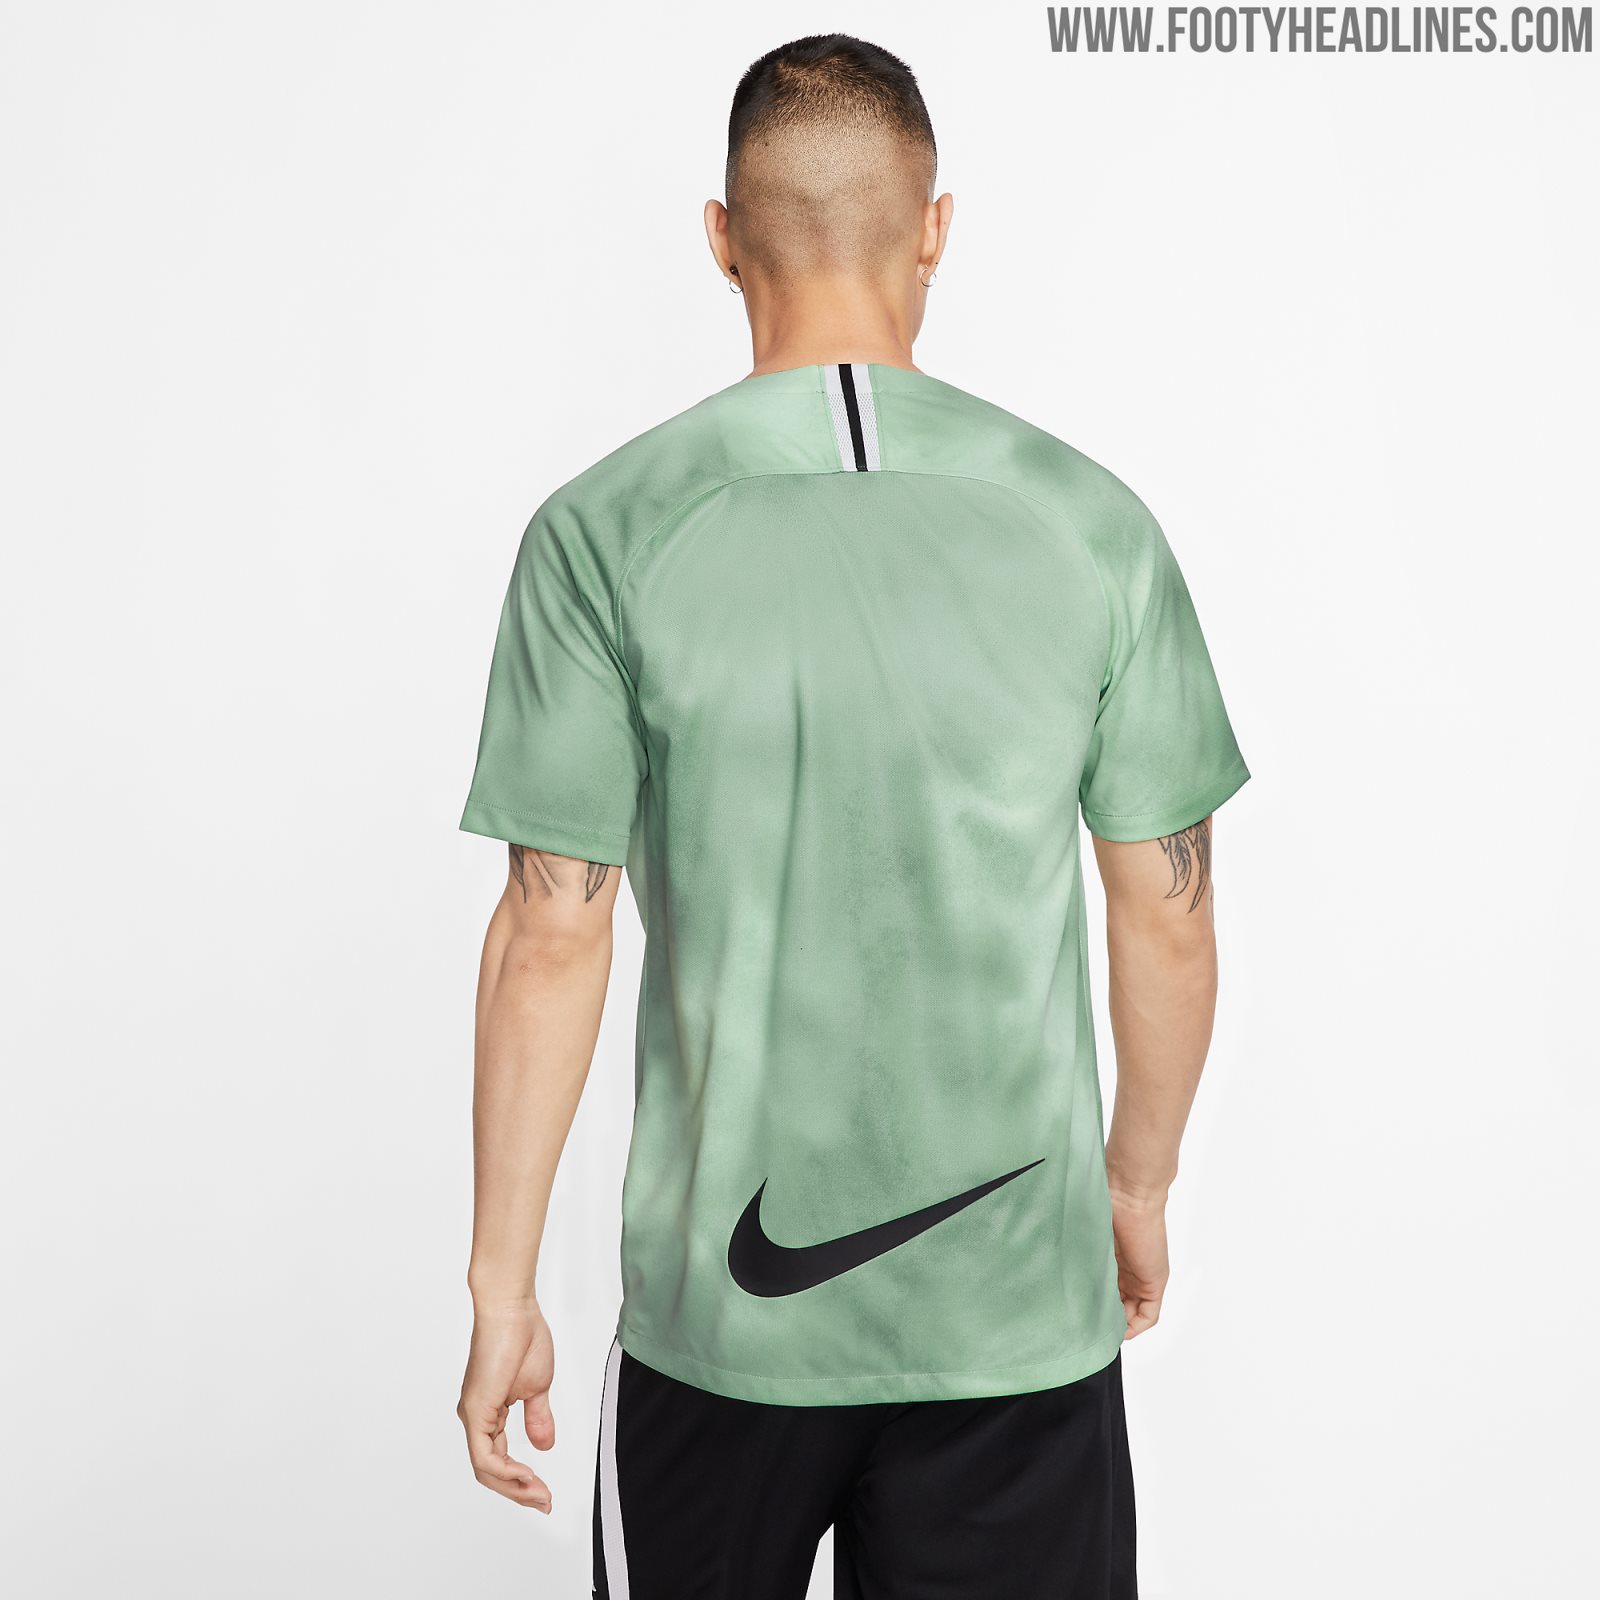 'Street Heat': Nike FC Summer 2019 Collection Released - Footy Headlines